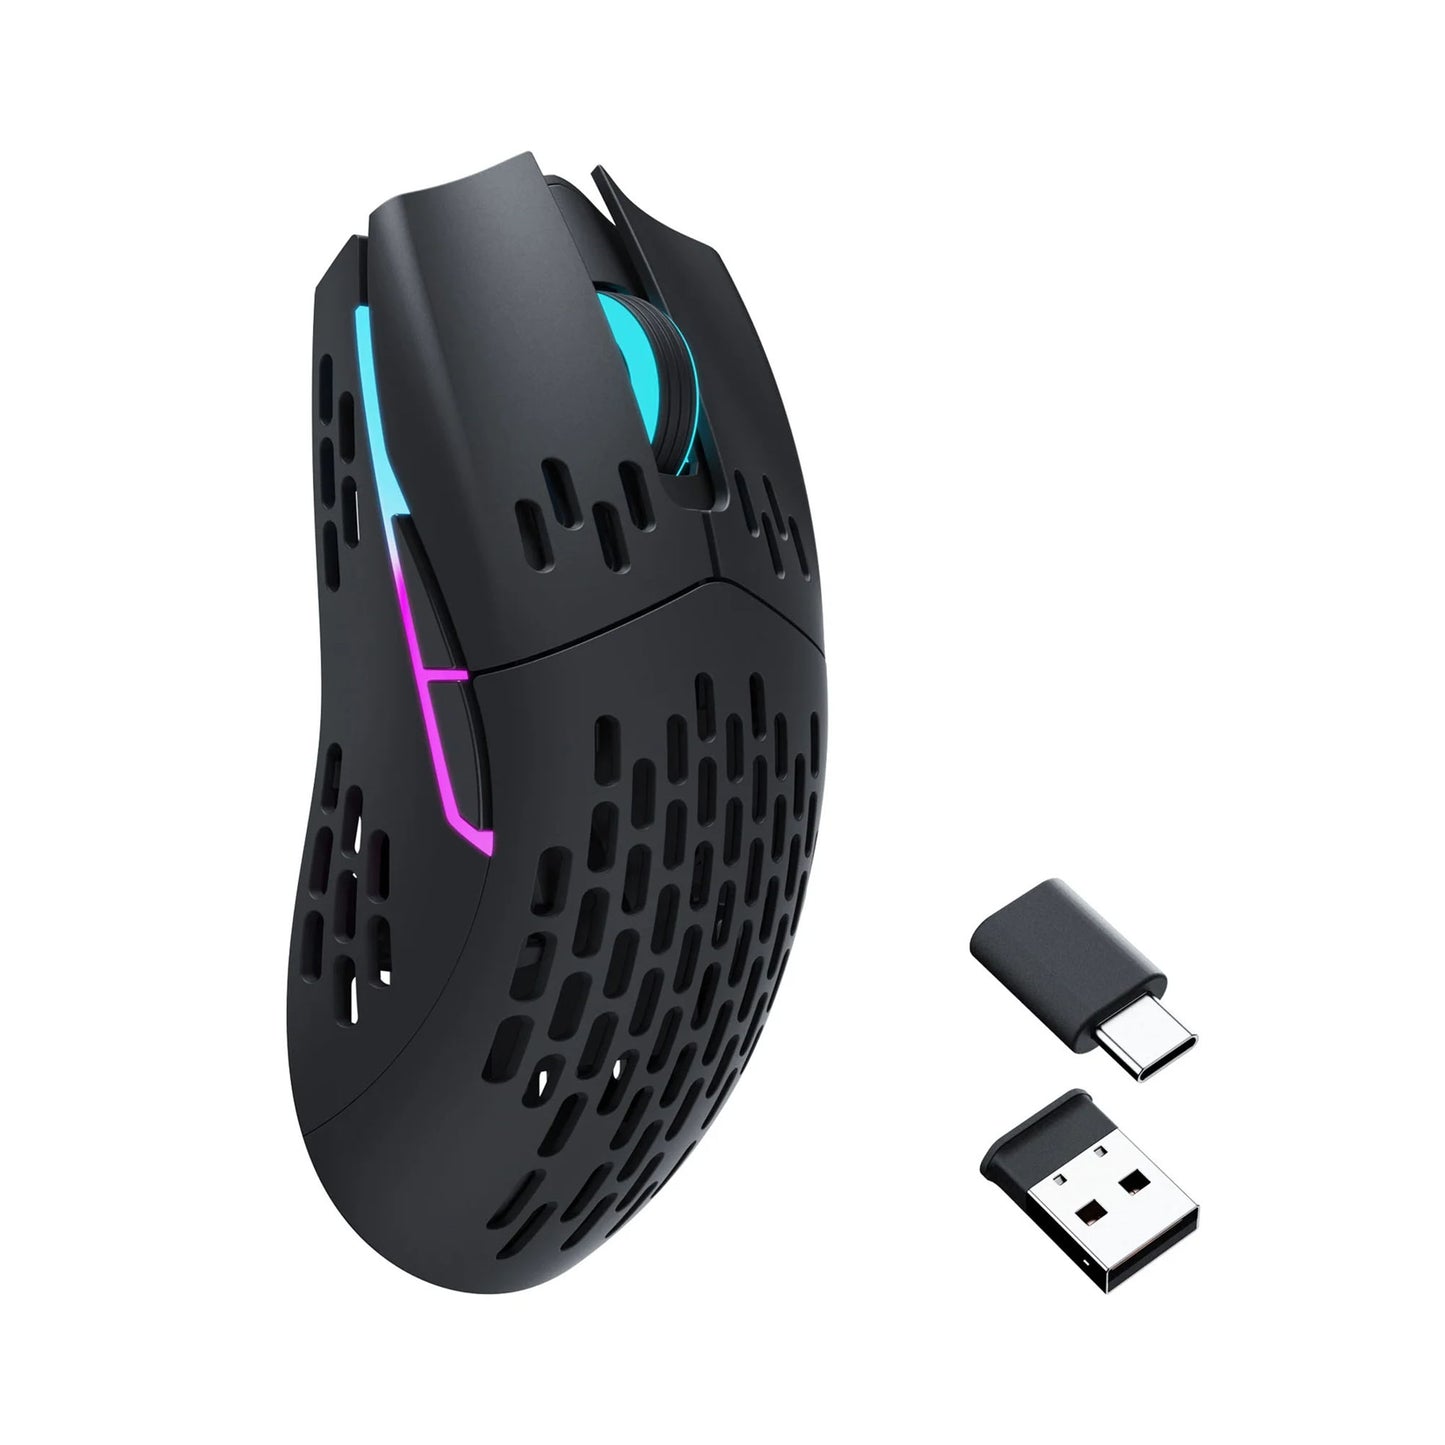 KEYCHRON M1 Wireless Mouse - Black